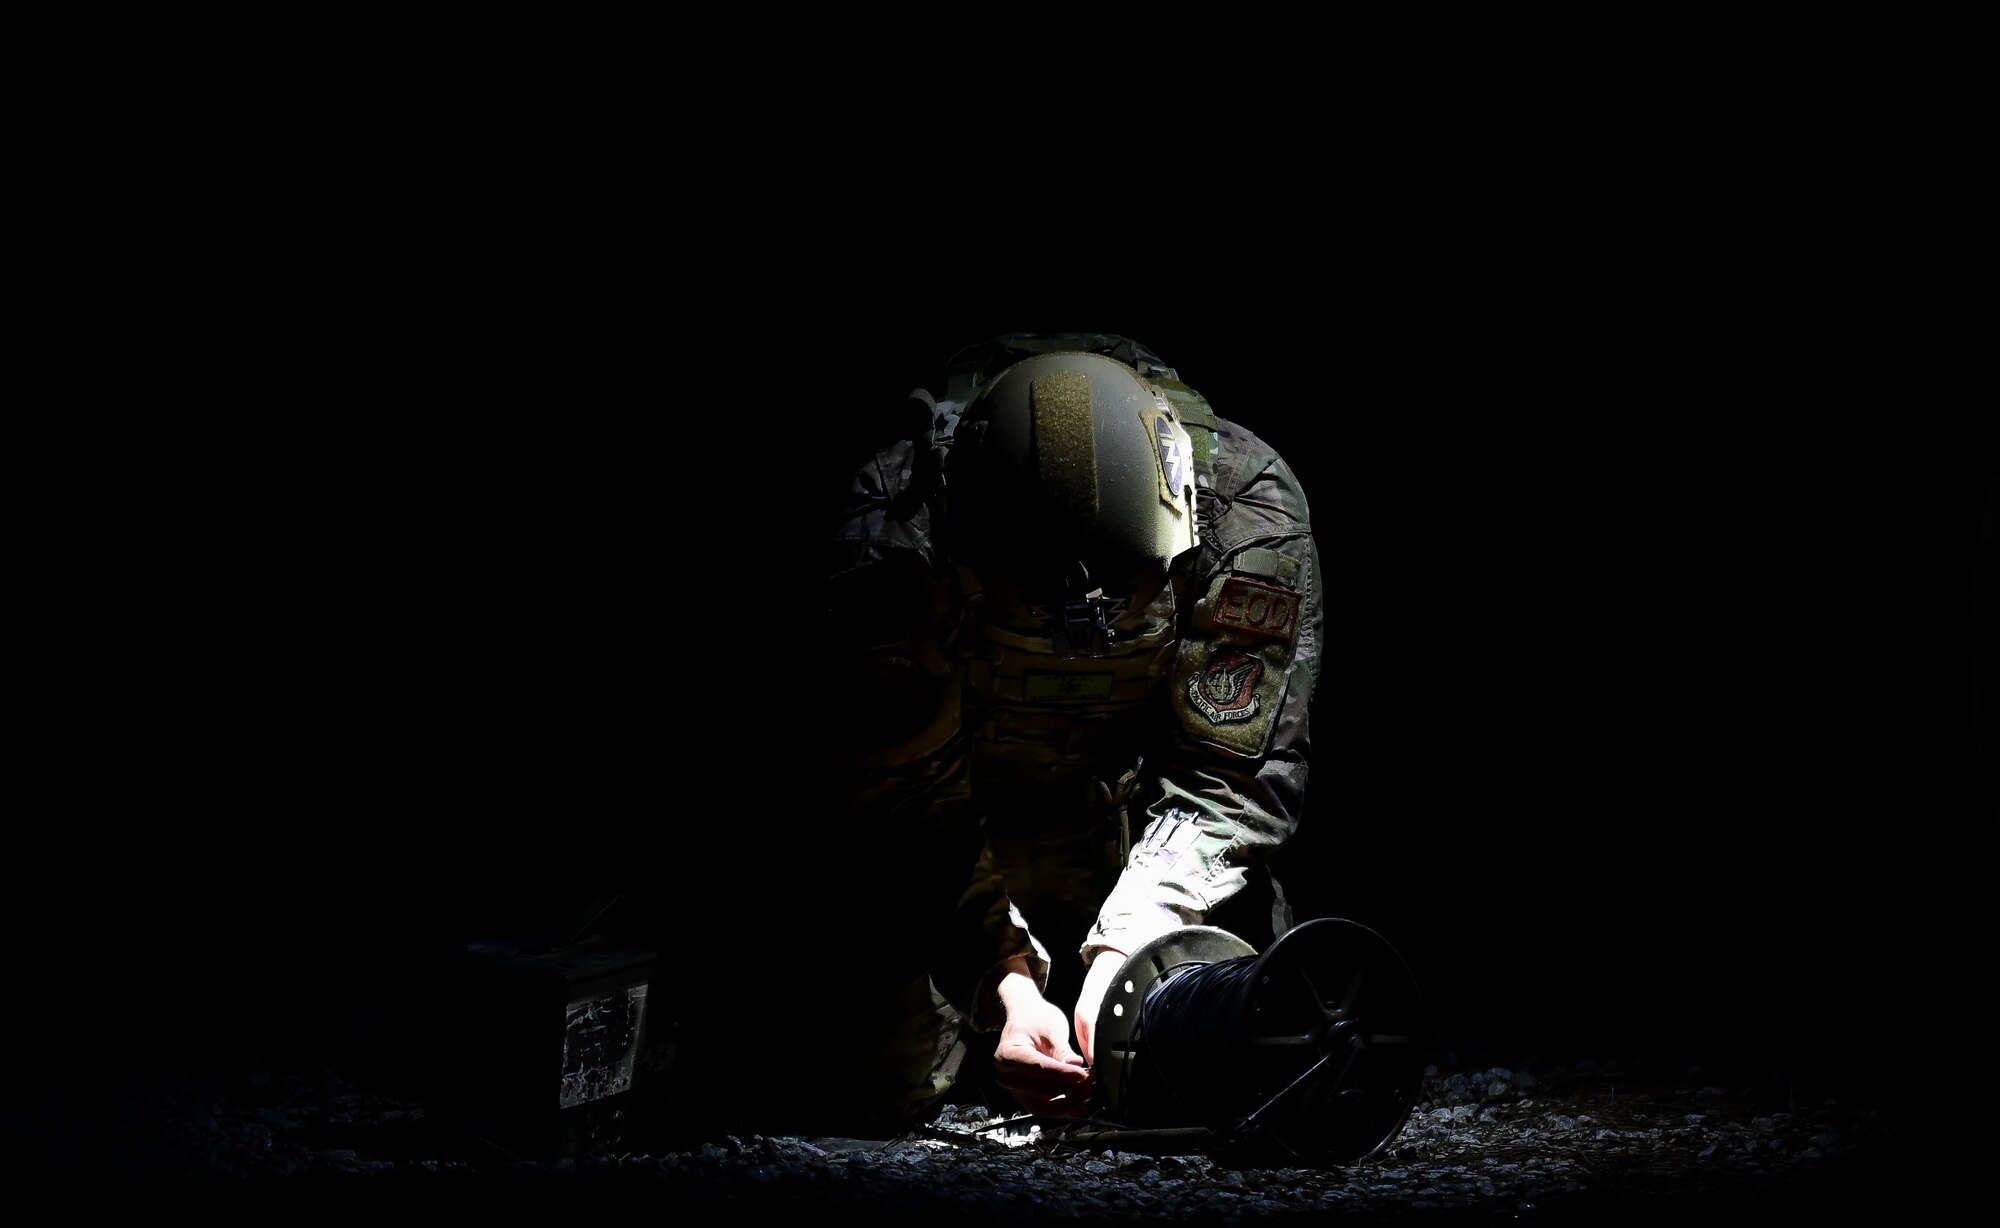 Man kneeling in dark sets up explosive.